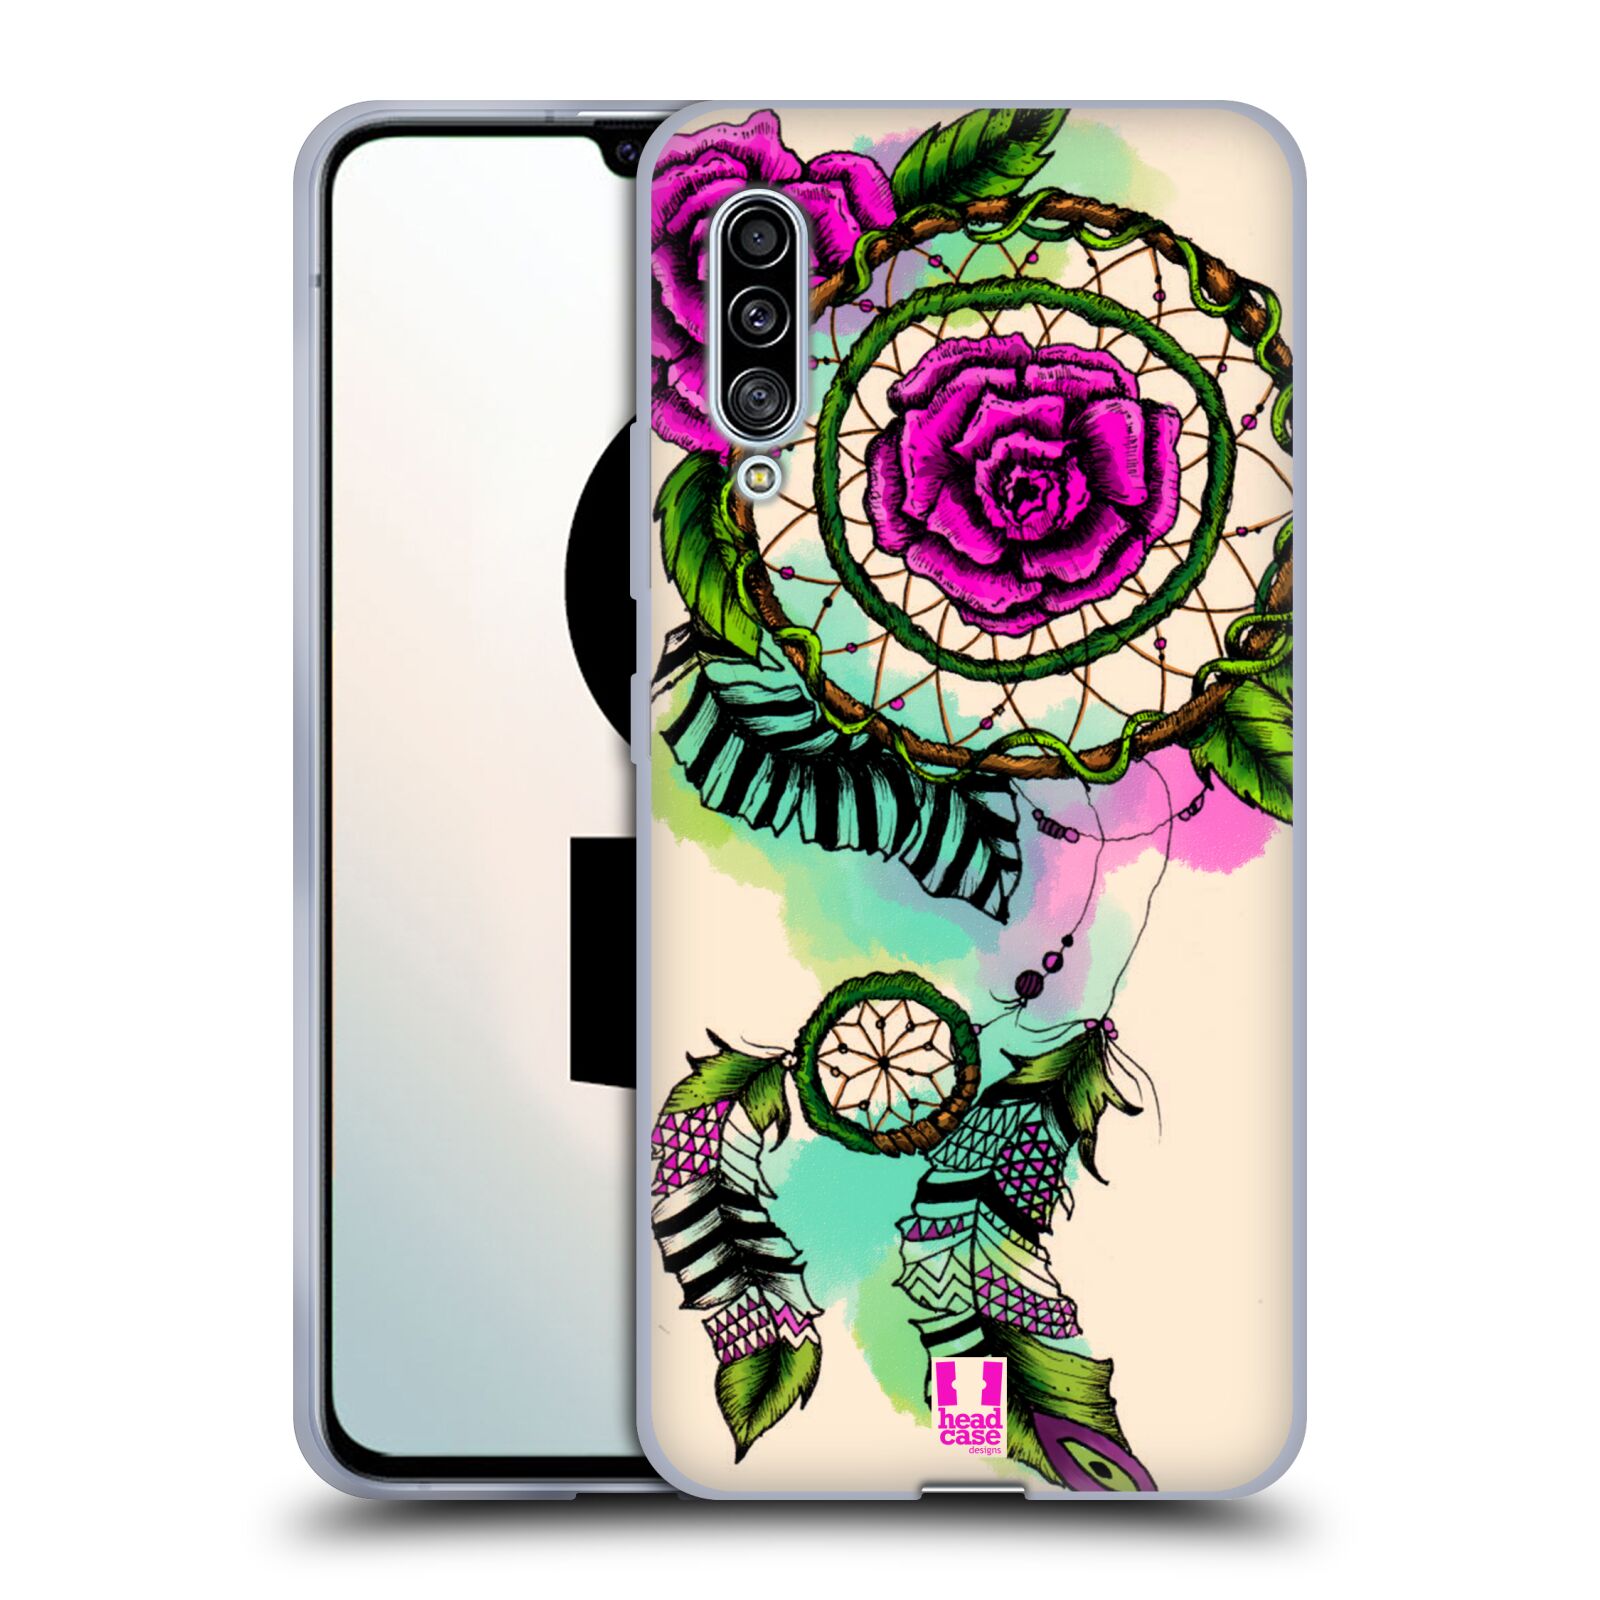 Plastový obal HEAD CASE na mobil Samsung Galaxy A90 5G vzor Květy lapač snů růže